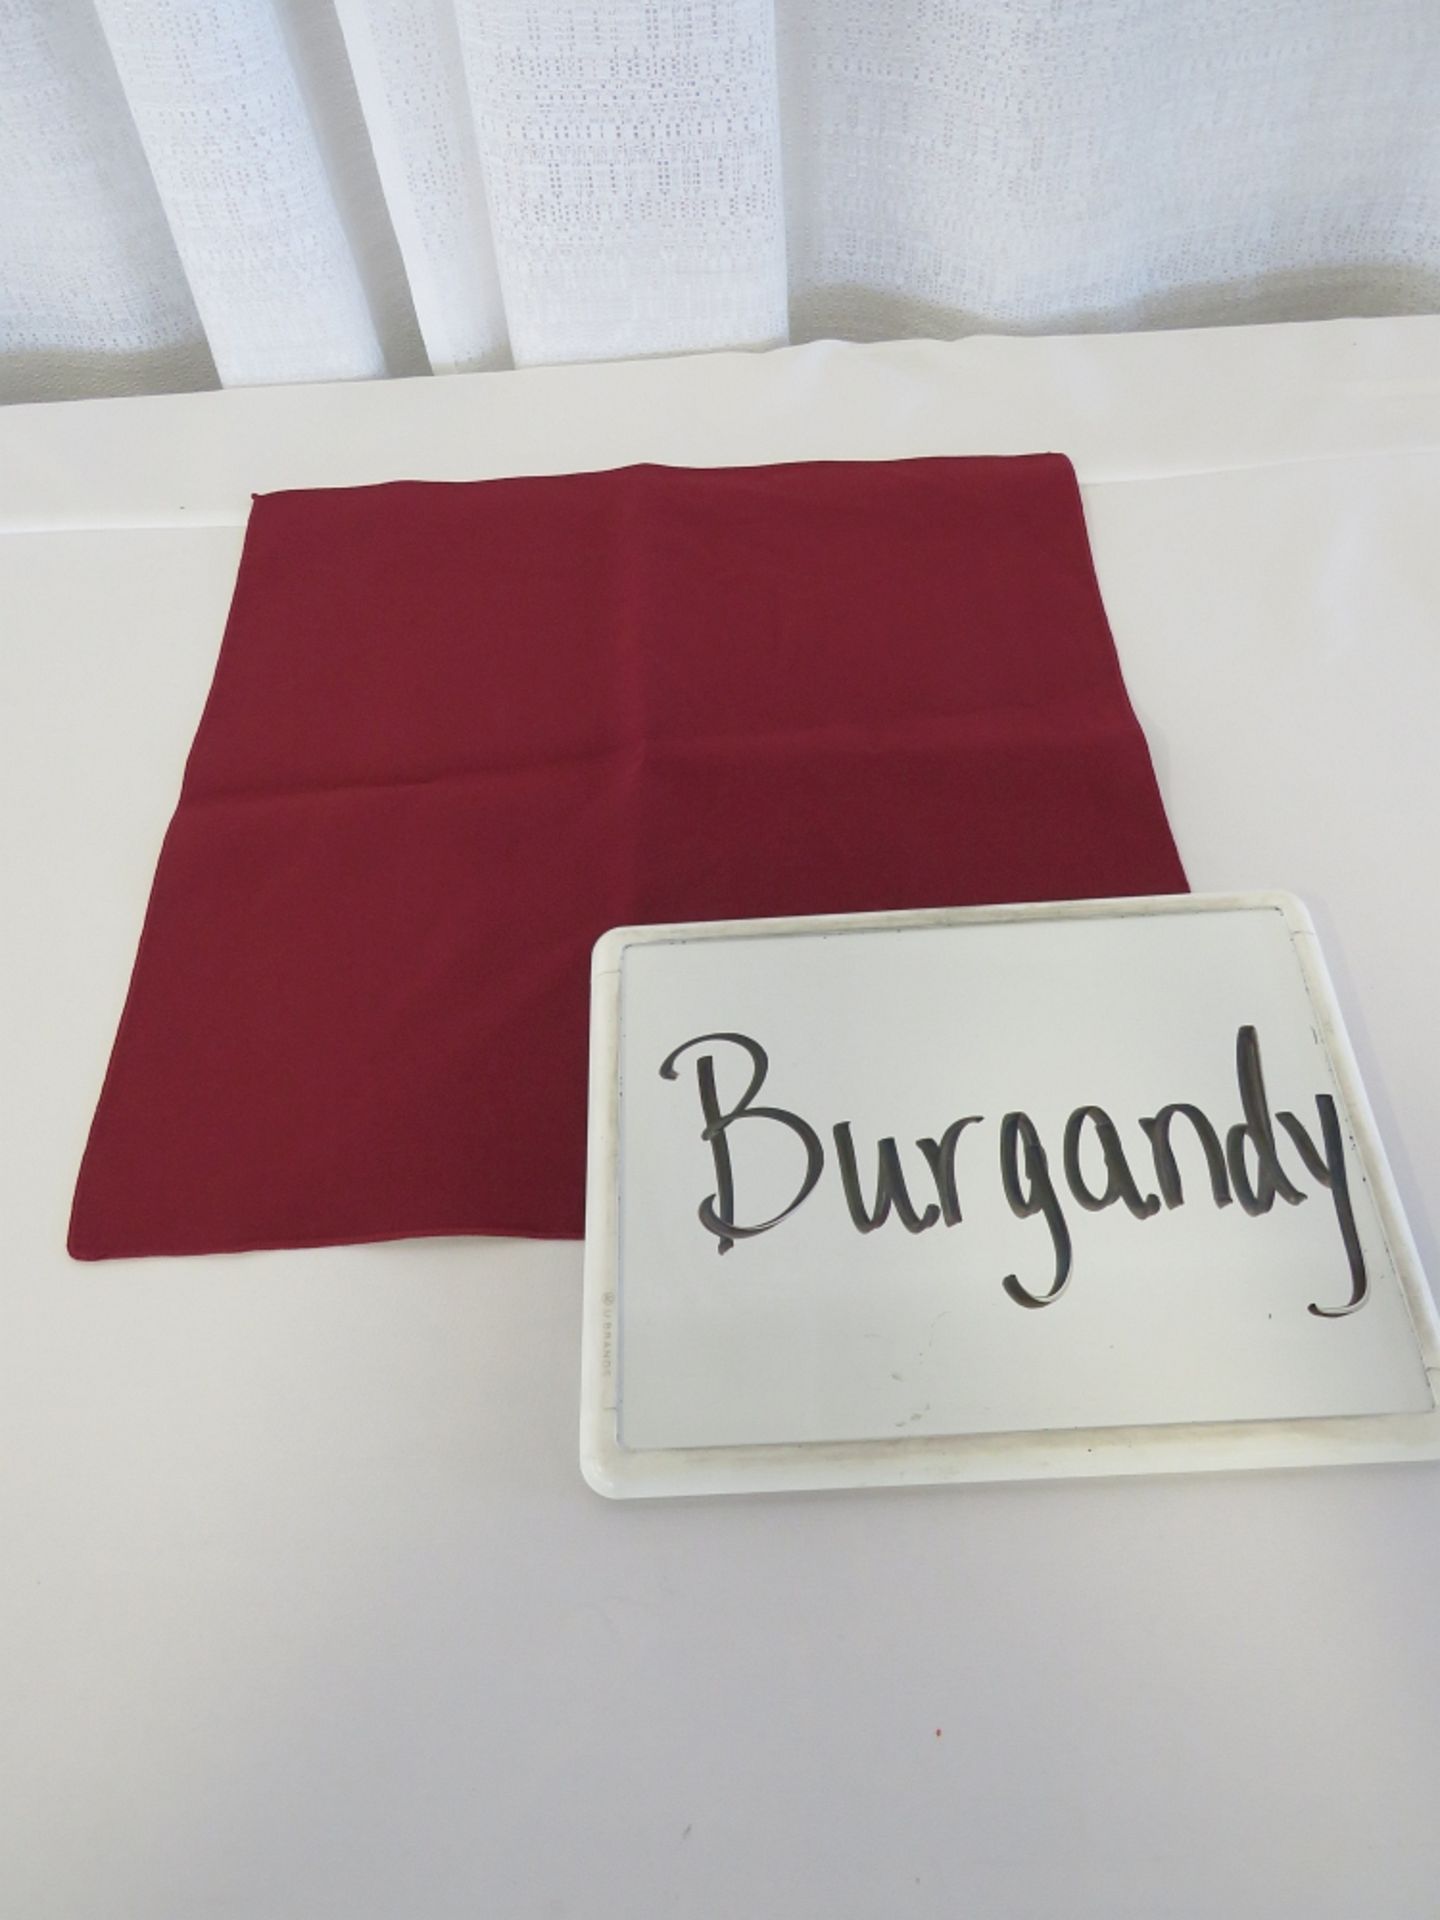 60" x 120" Tablecloth, Brugandy